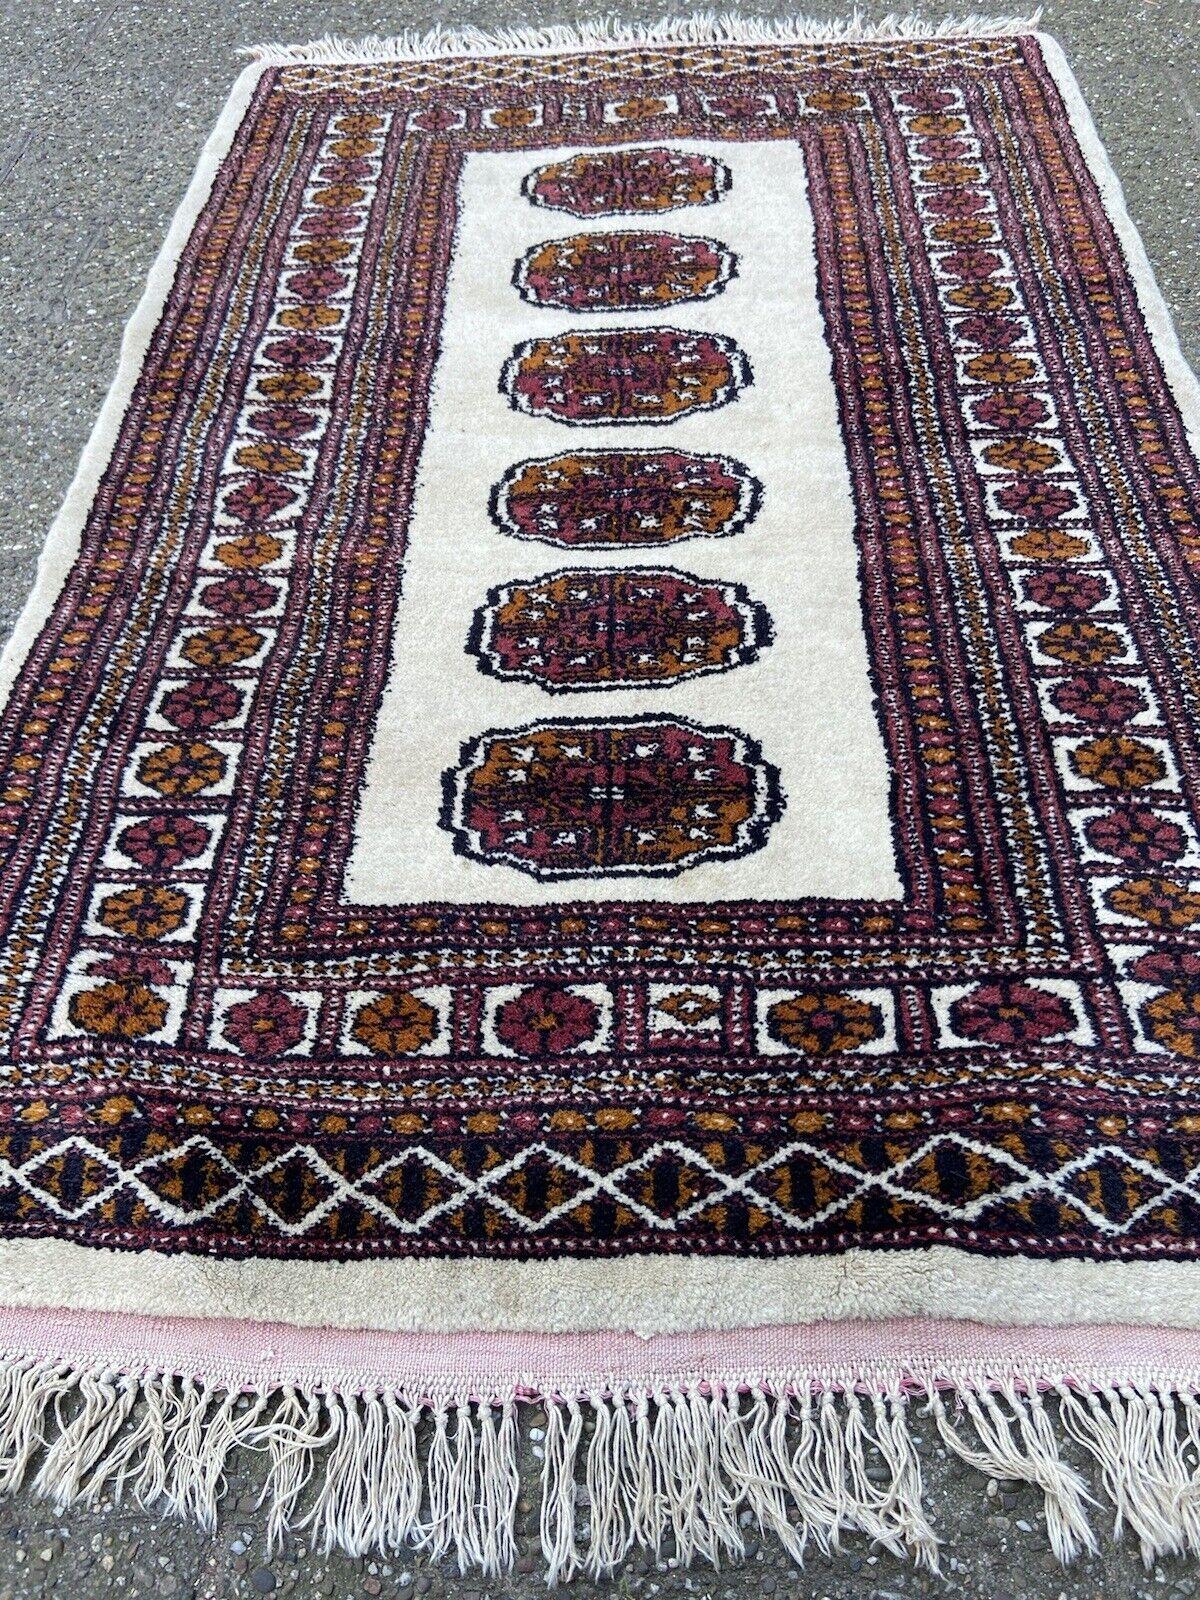 Handmade Vintage Uzbek Bukhara Rug 2.7' x 4.3', 1960s - 1S09 For Sale 3